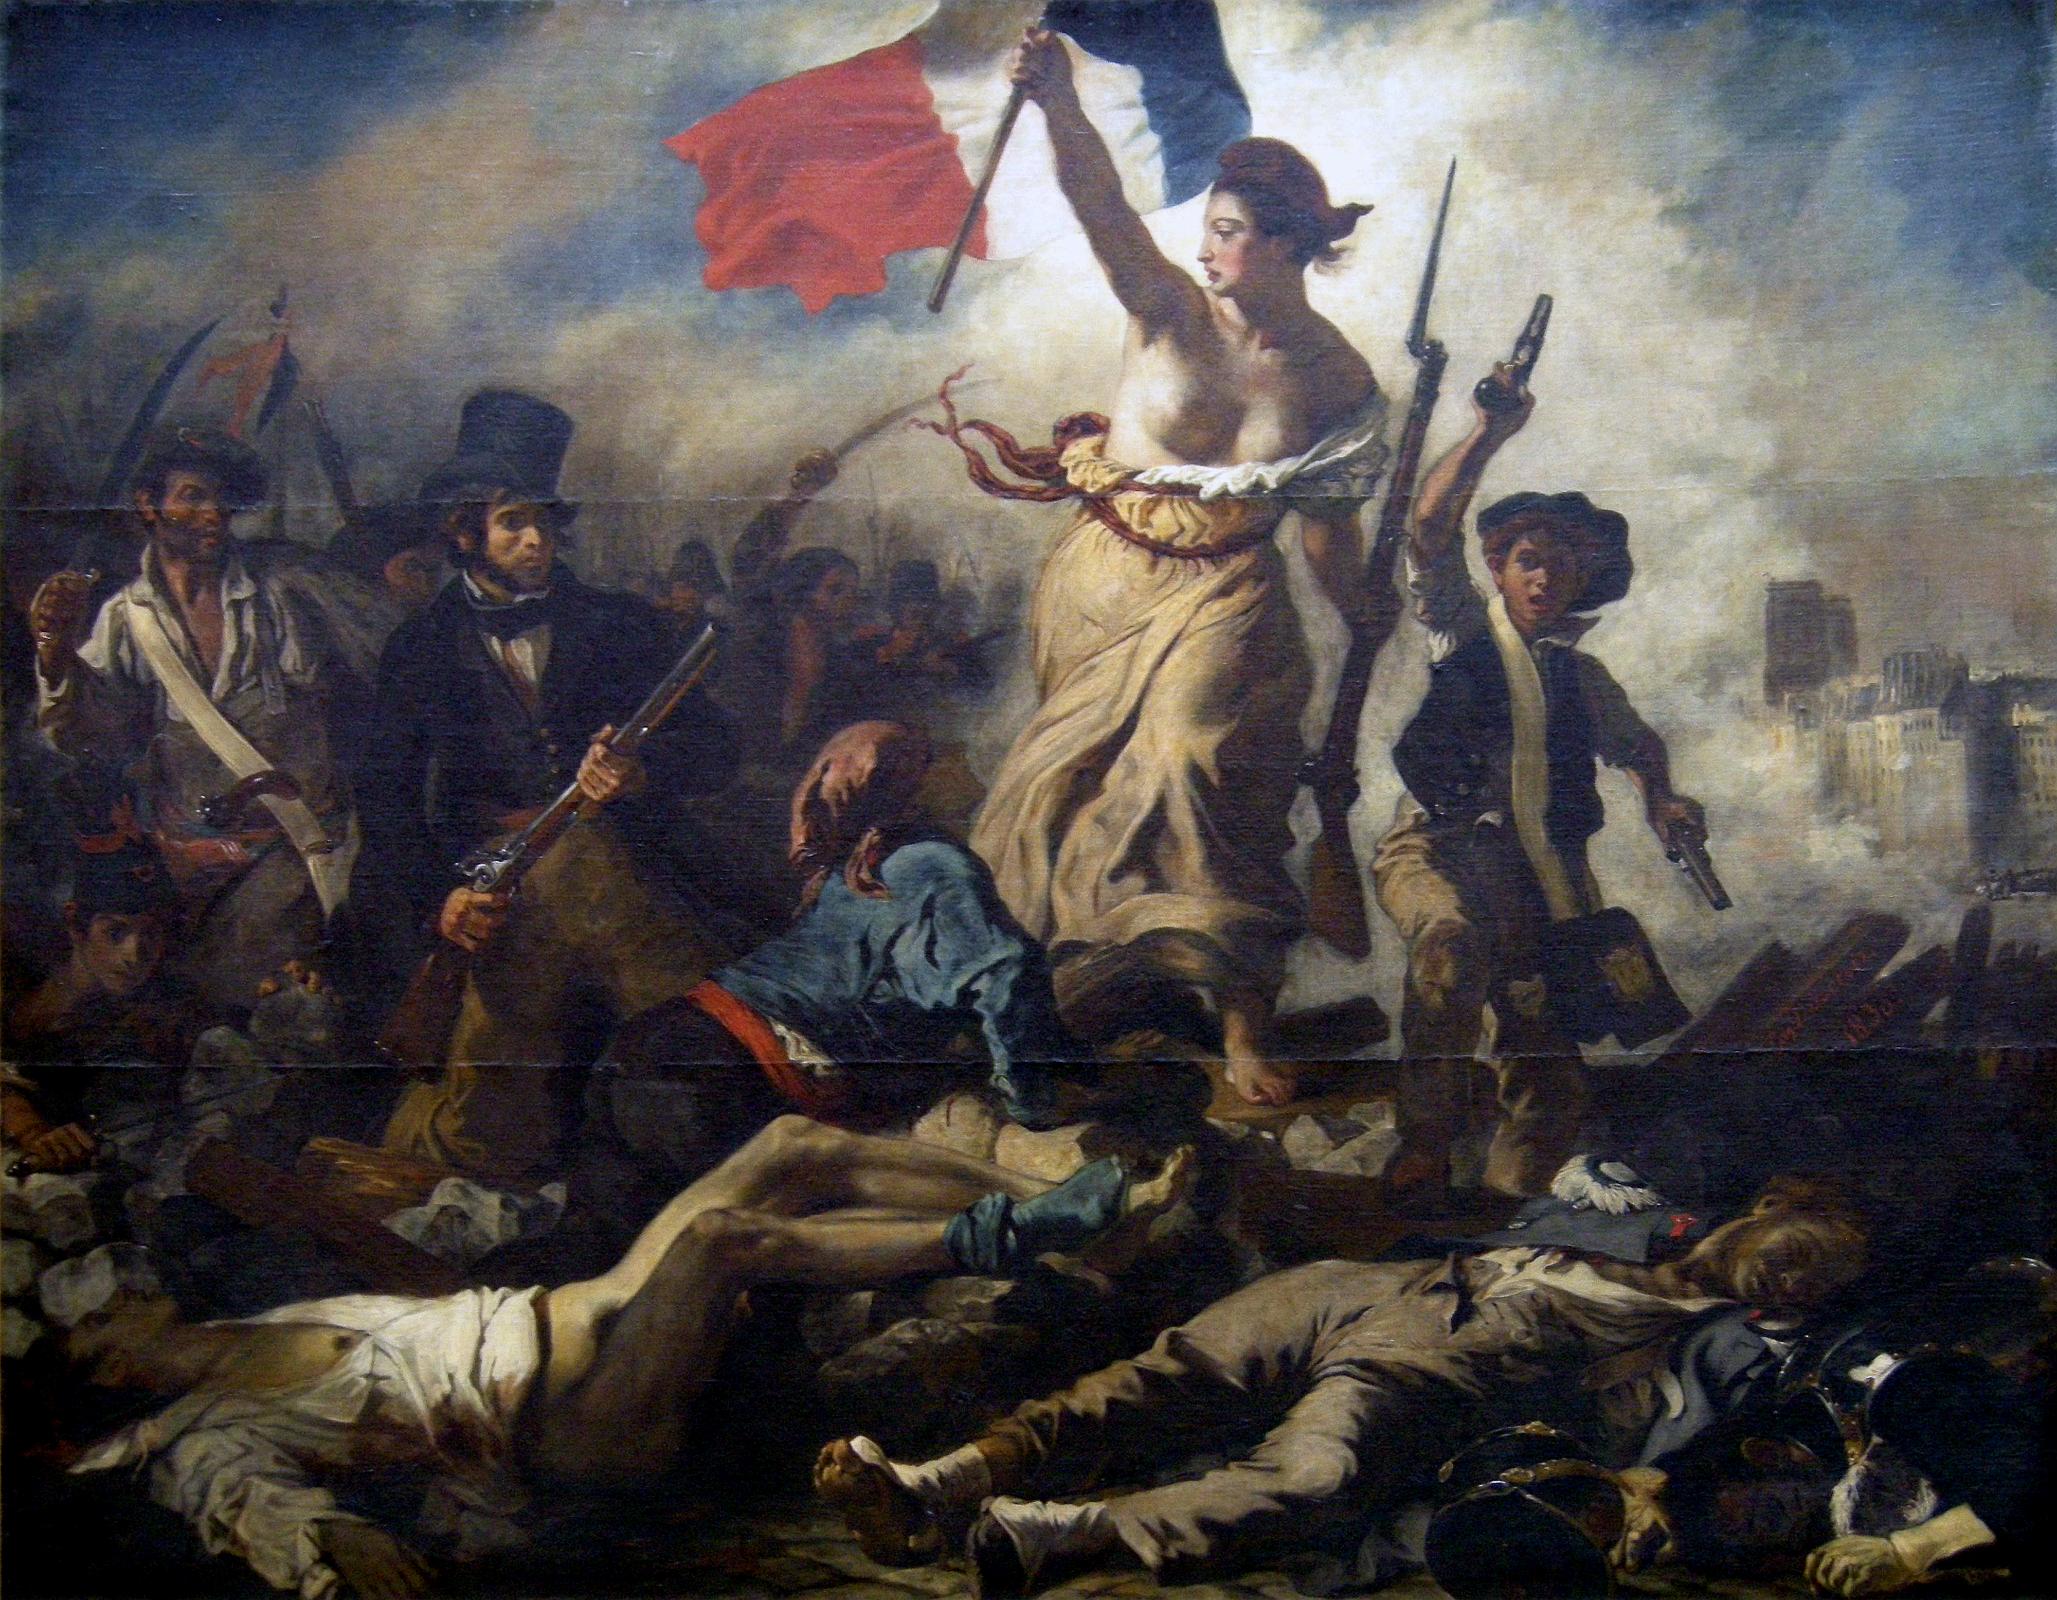 Paris Louvre Painting 1830 Eugene Delacroix - Liberty Leading the People 